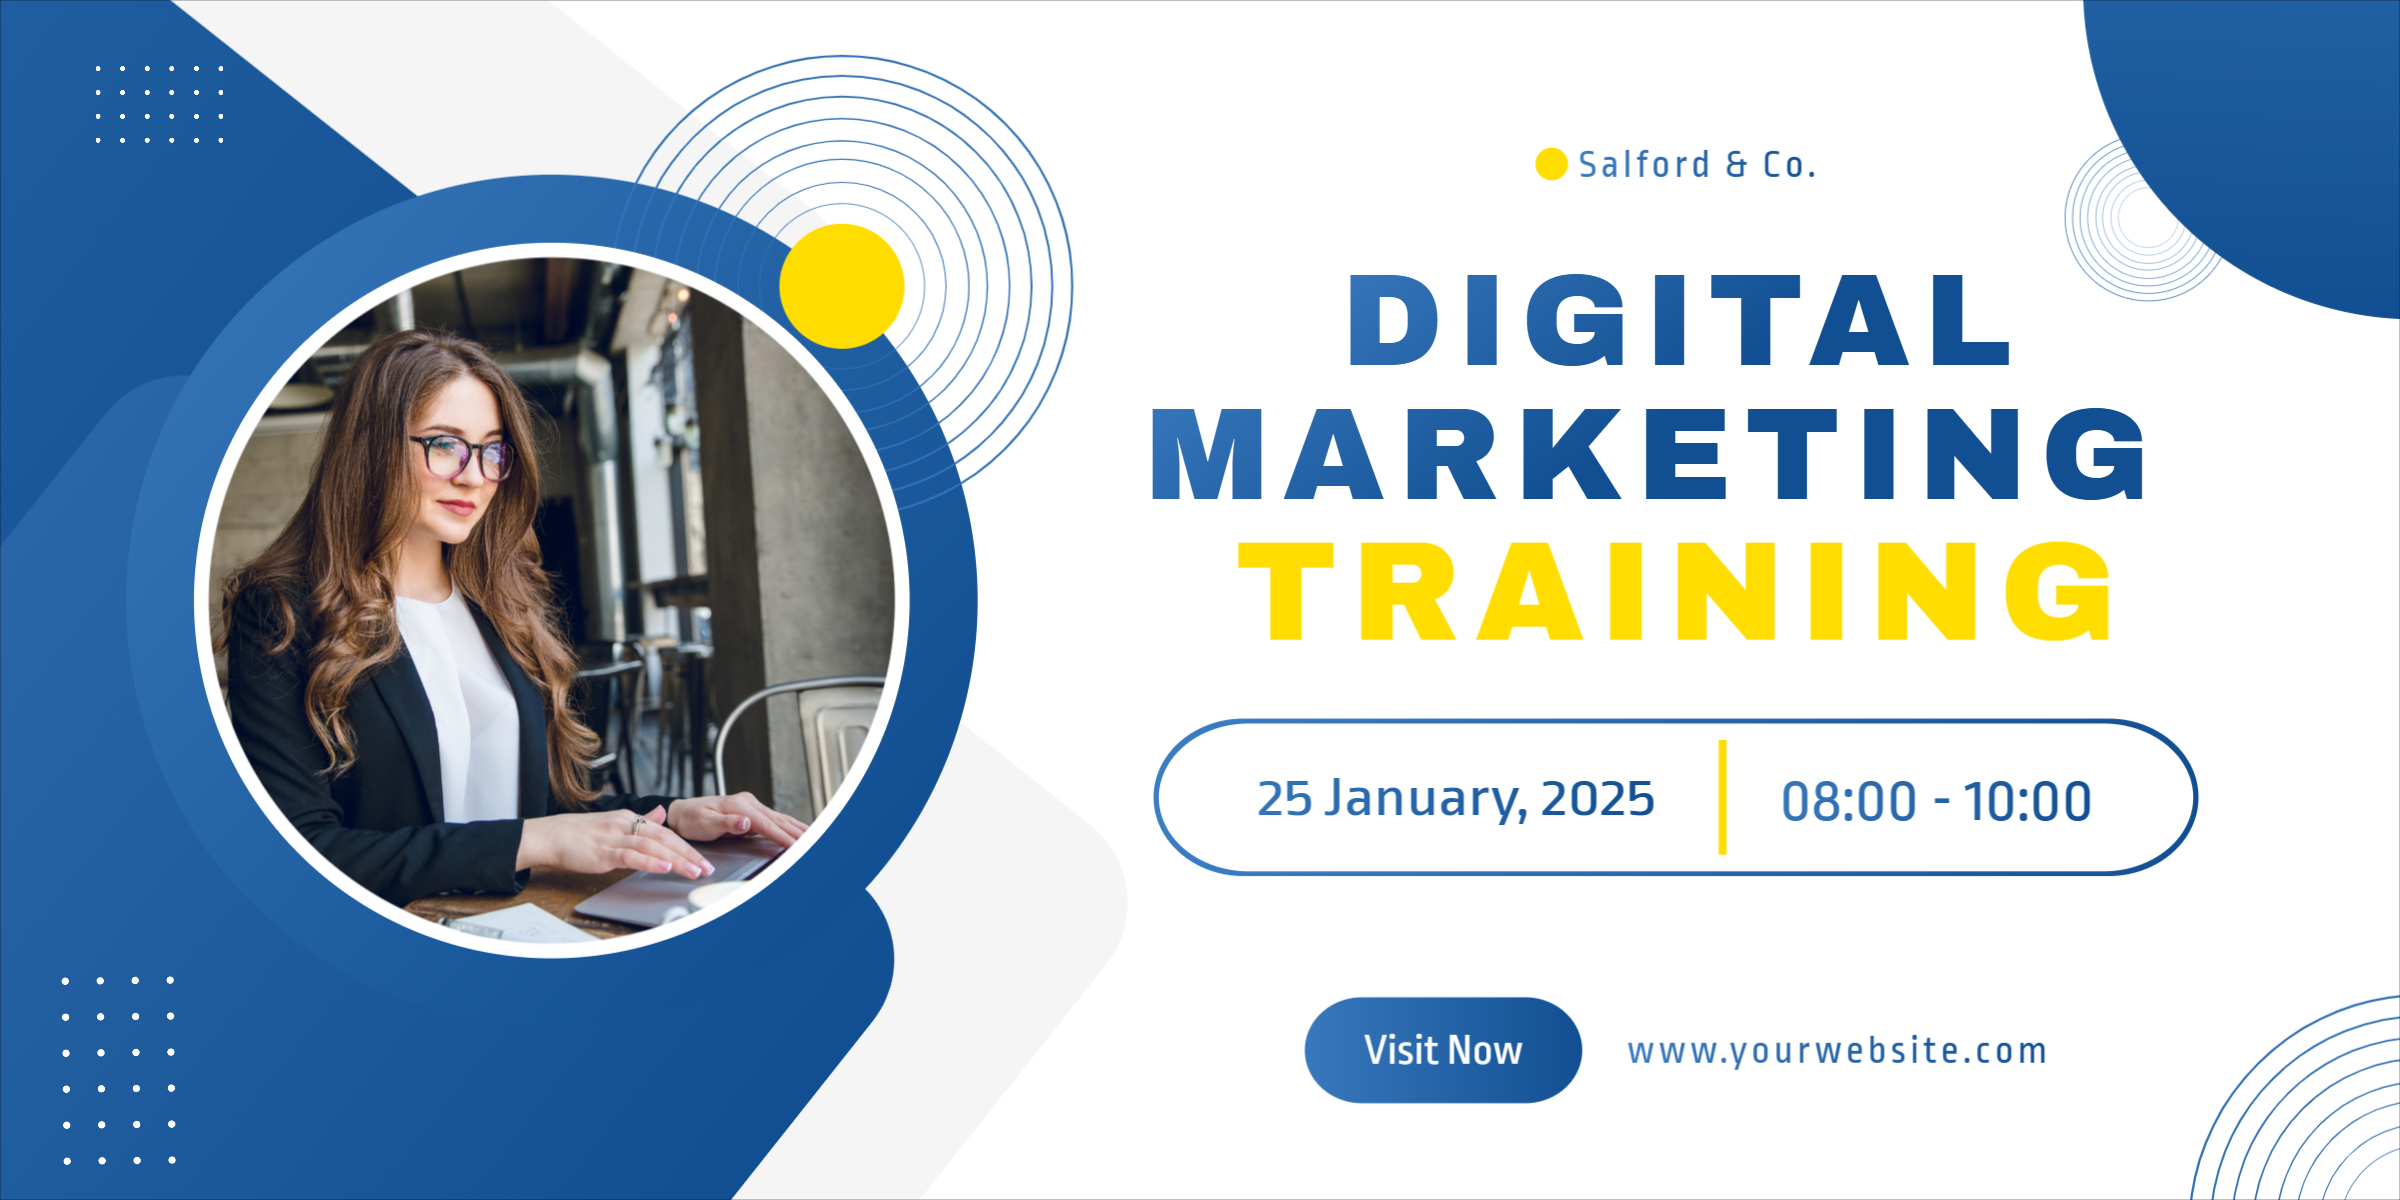 Digital Marketing Training Banner design download for free